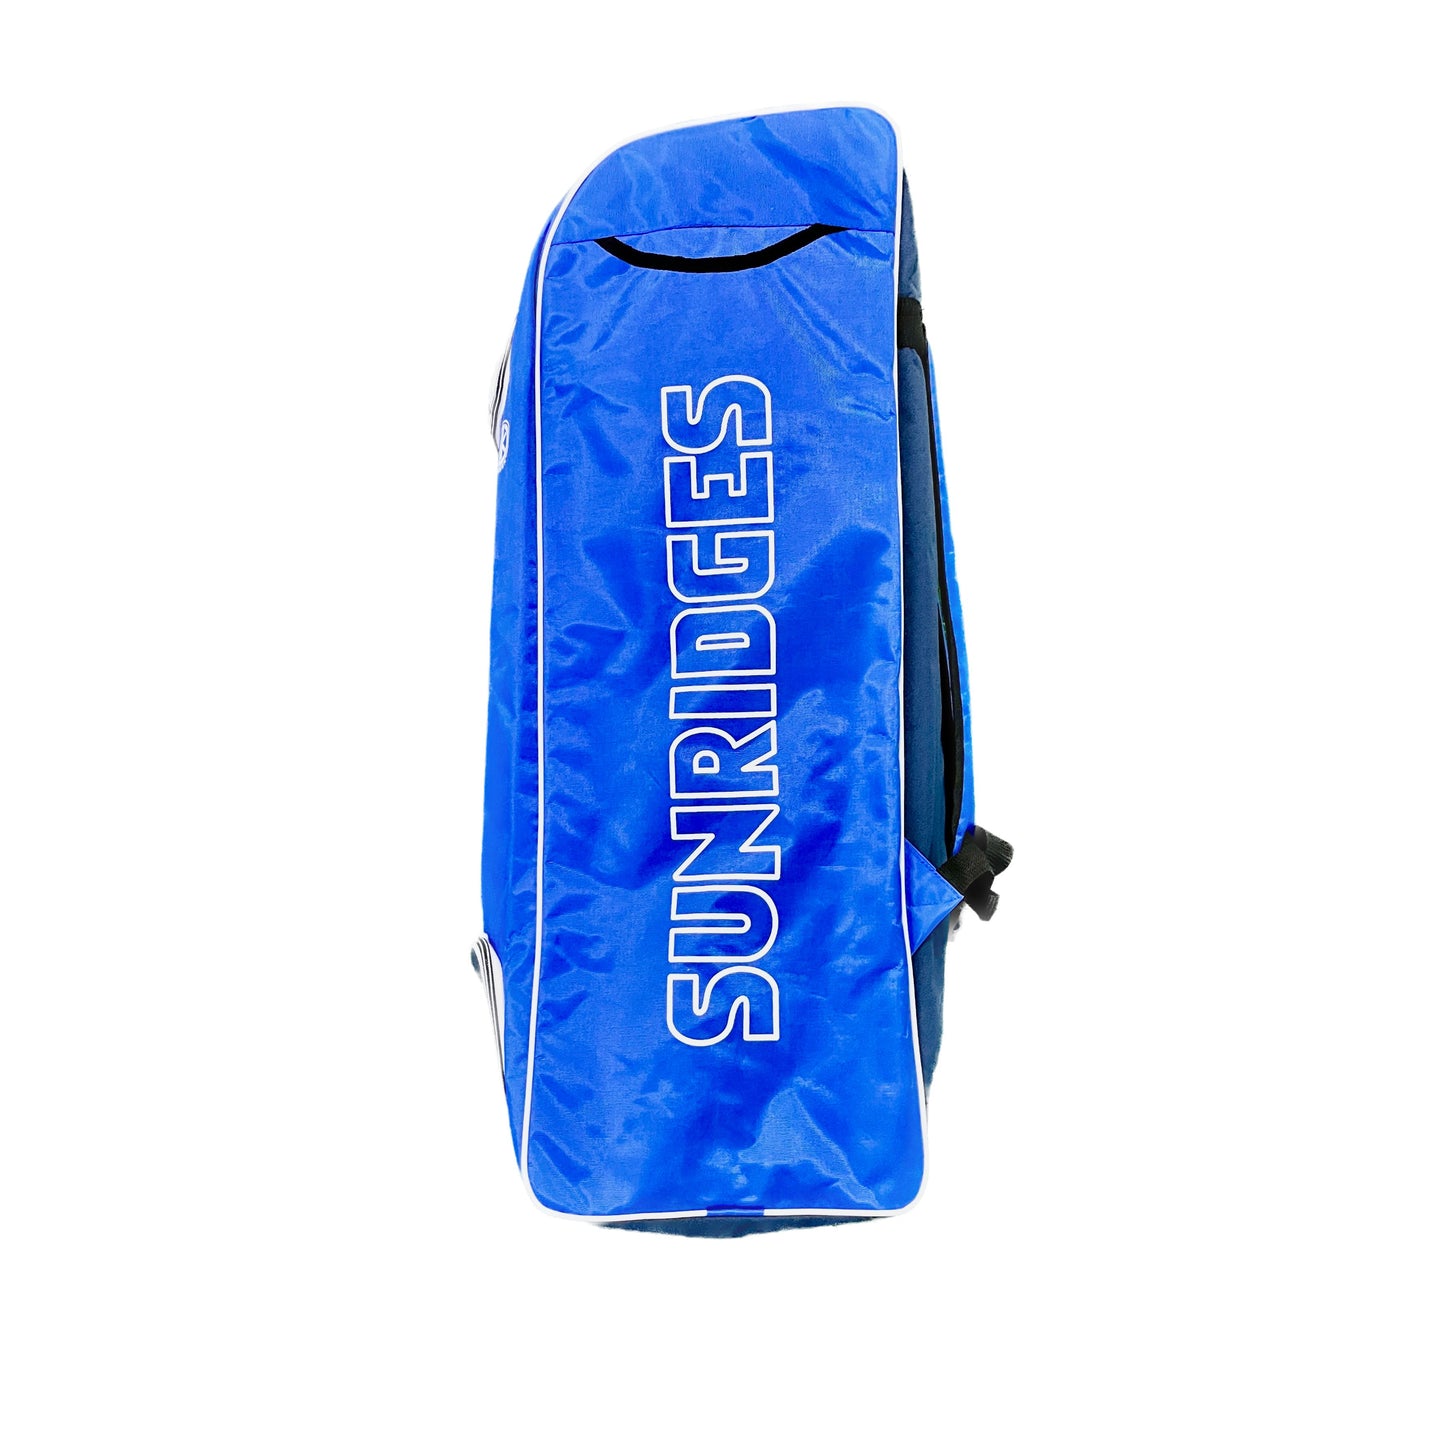 SS Mass Medium Duffle Senior Cricket Kit Bag Backpack Style